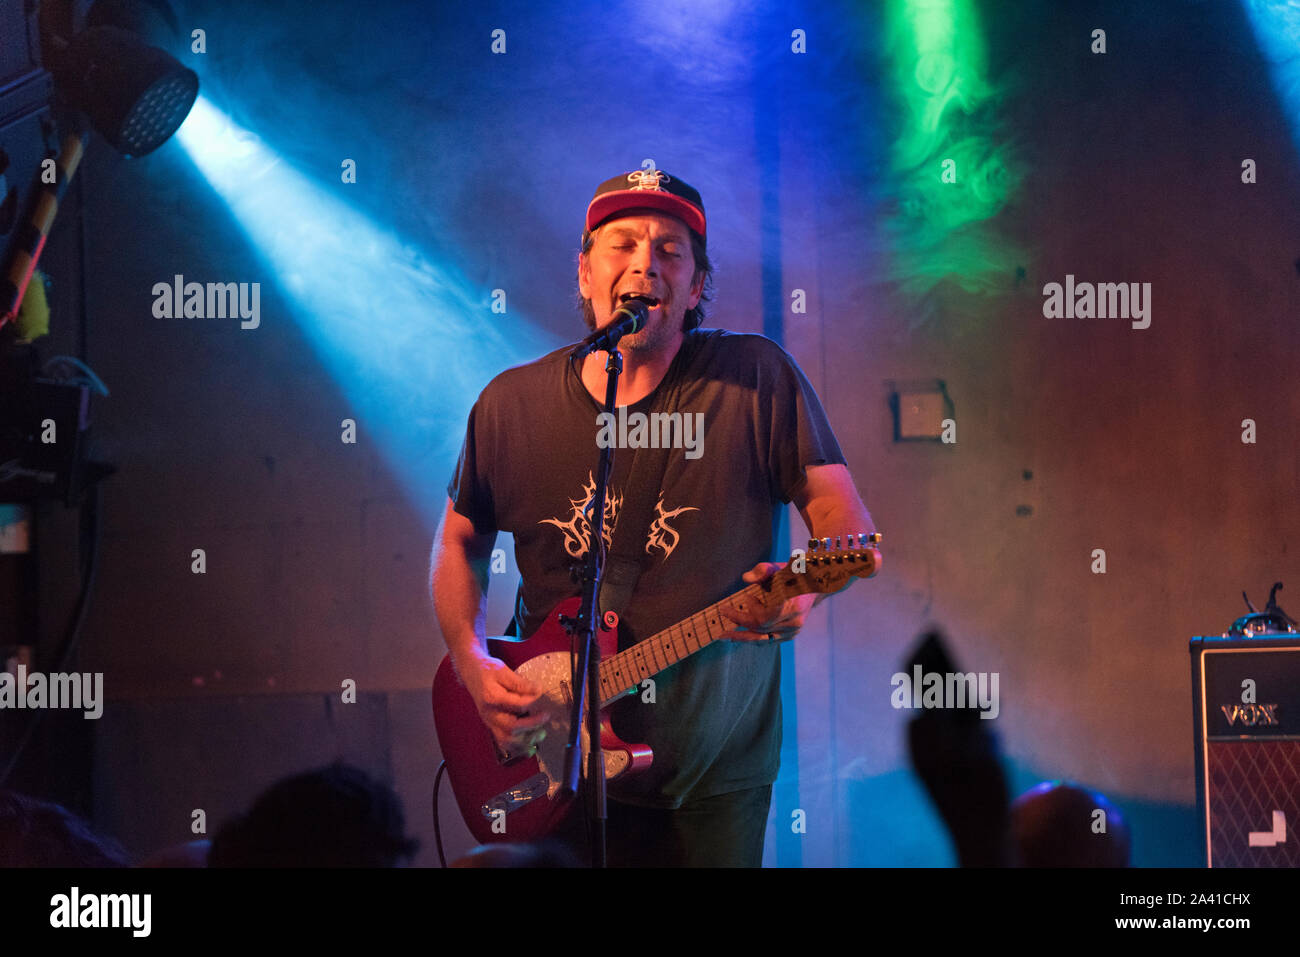 Brudenell Social Club, Leeds, UK. 3rd October 2019. US indie band Sebadoh in concert. Jason Loewenstein singer and guitarist. Stock Photo